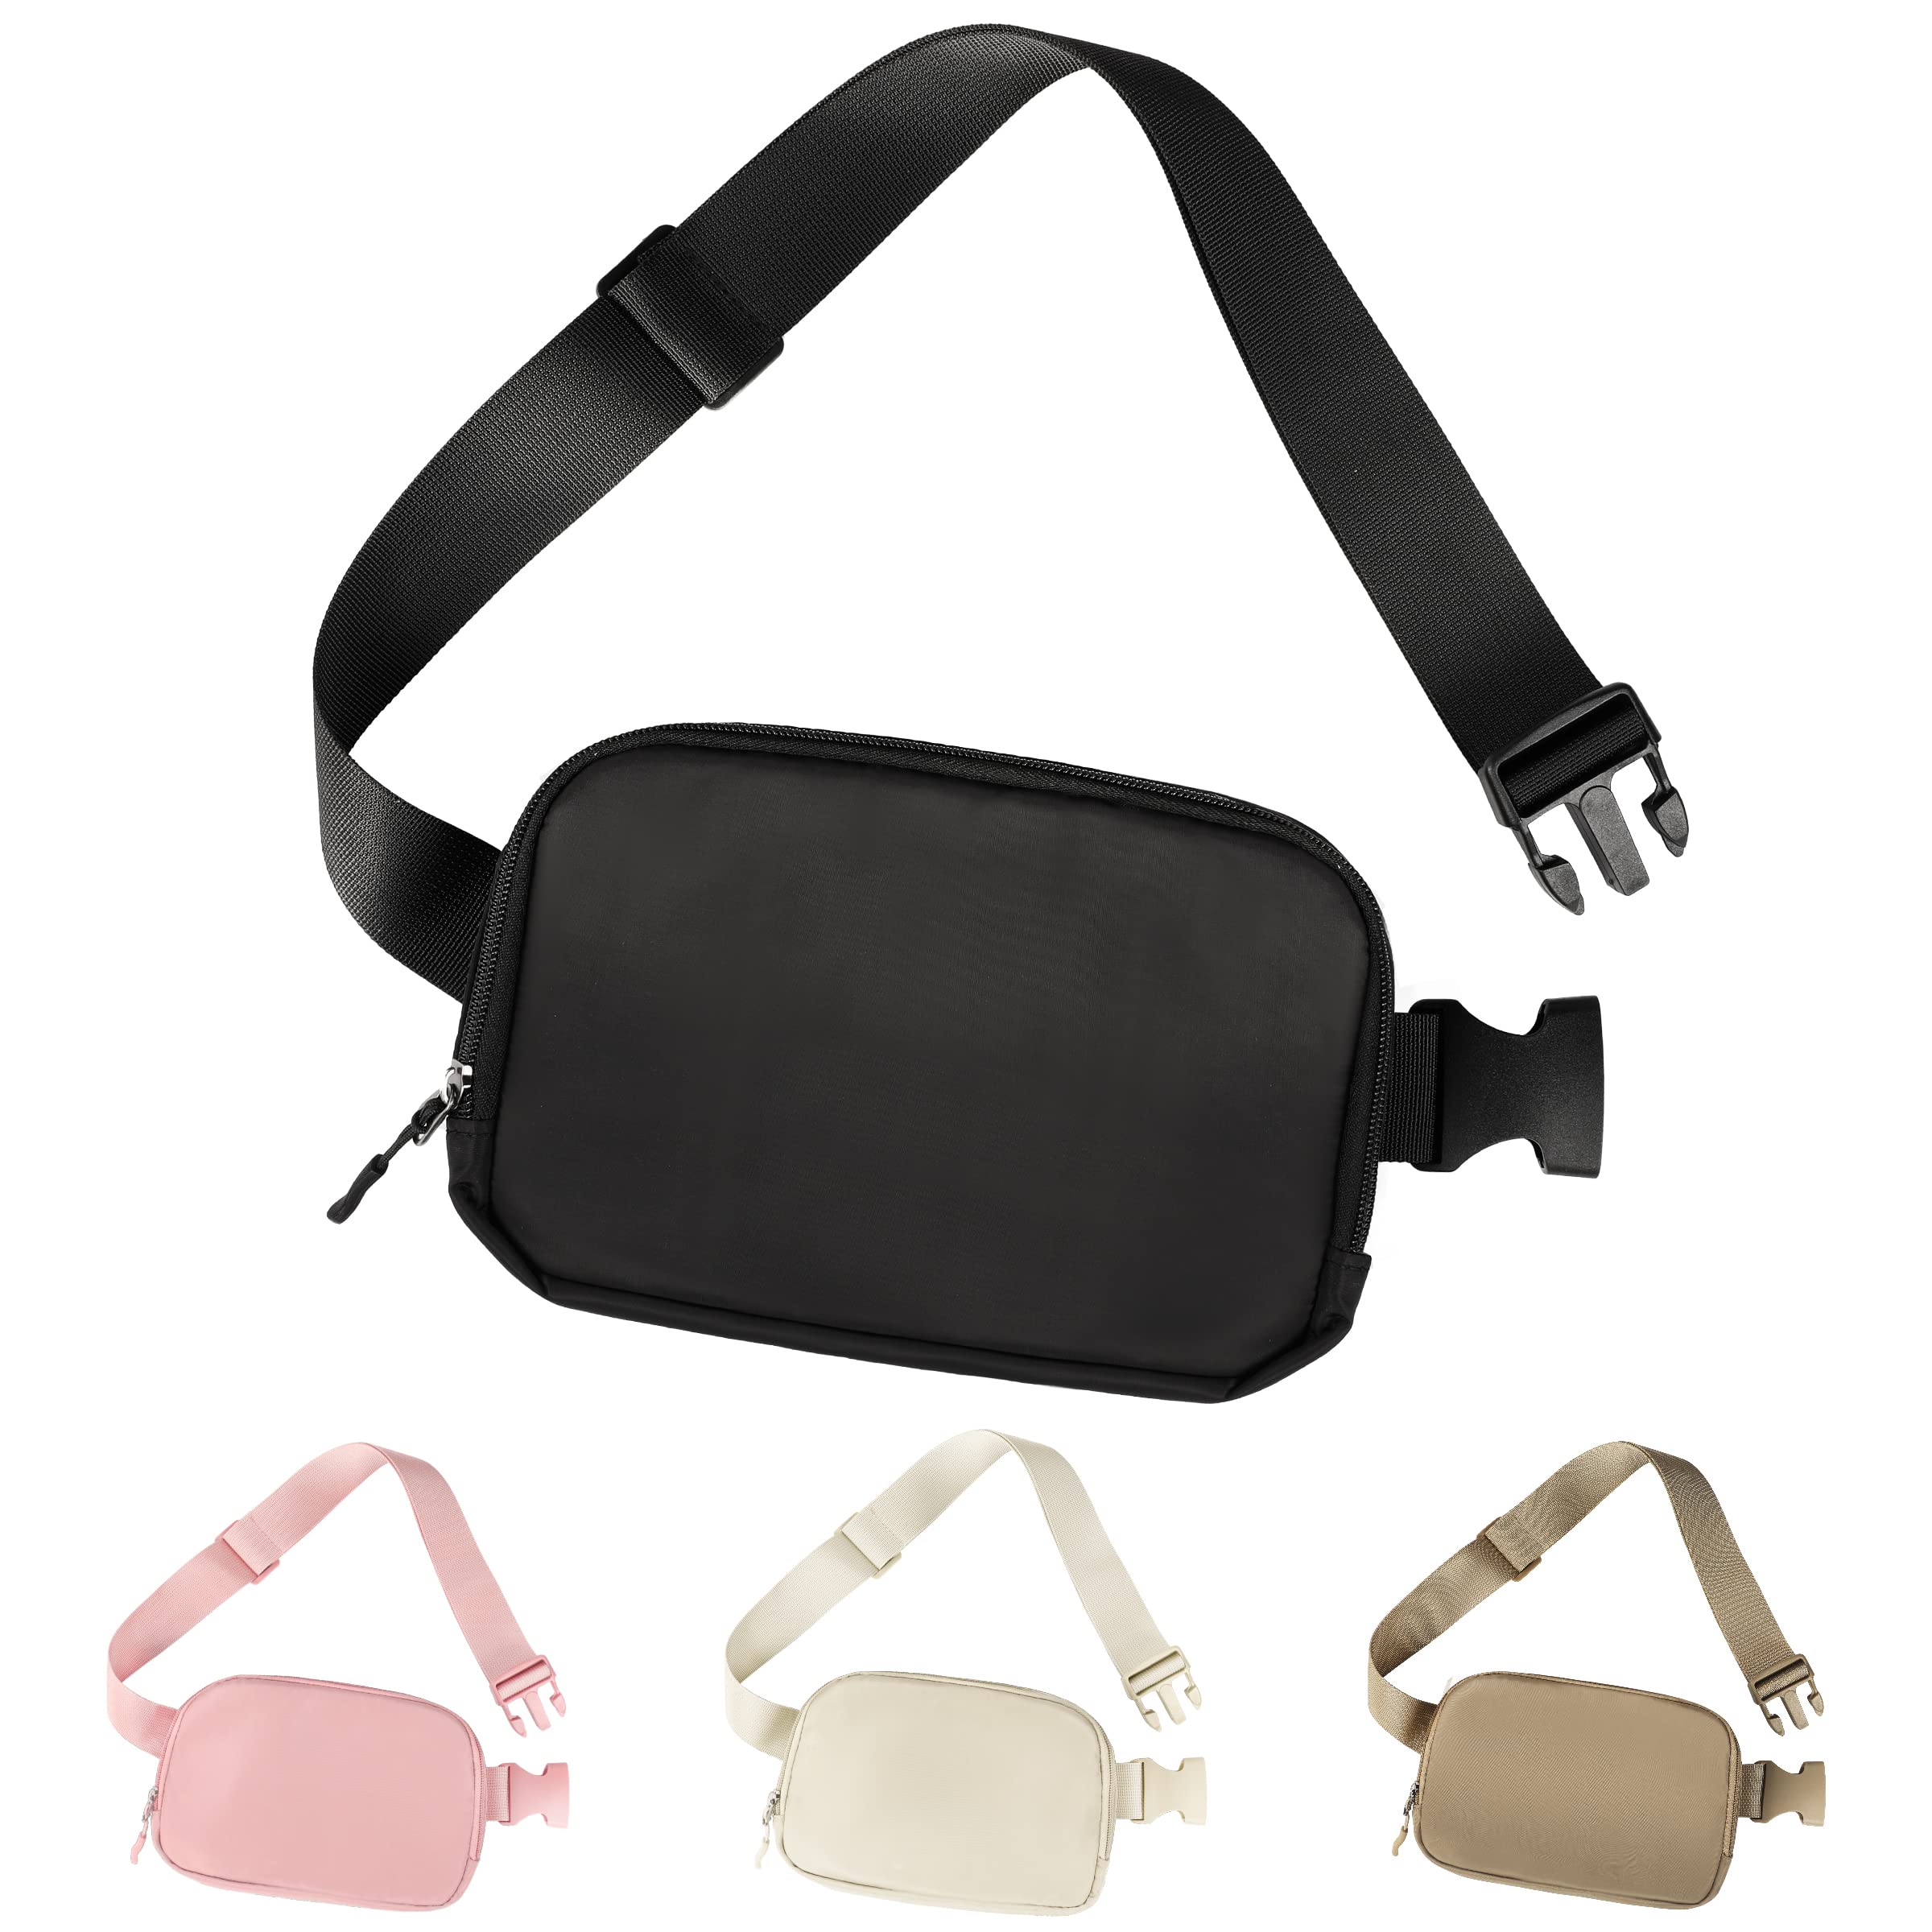 Black Leather compact stylish belt bag